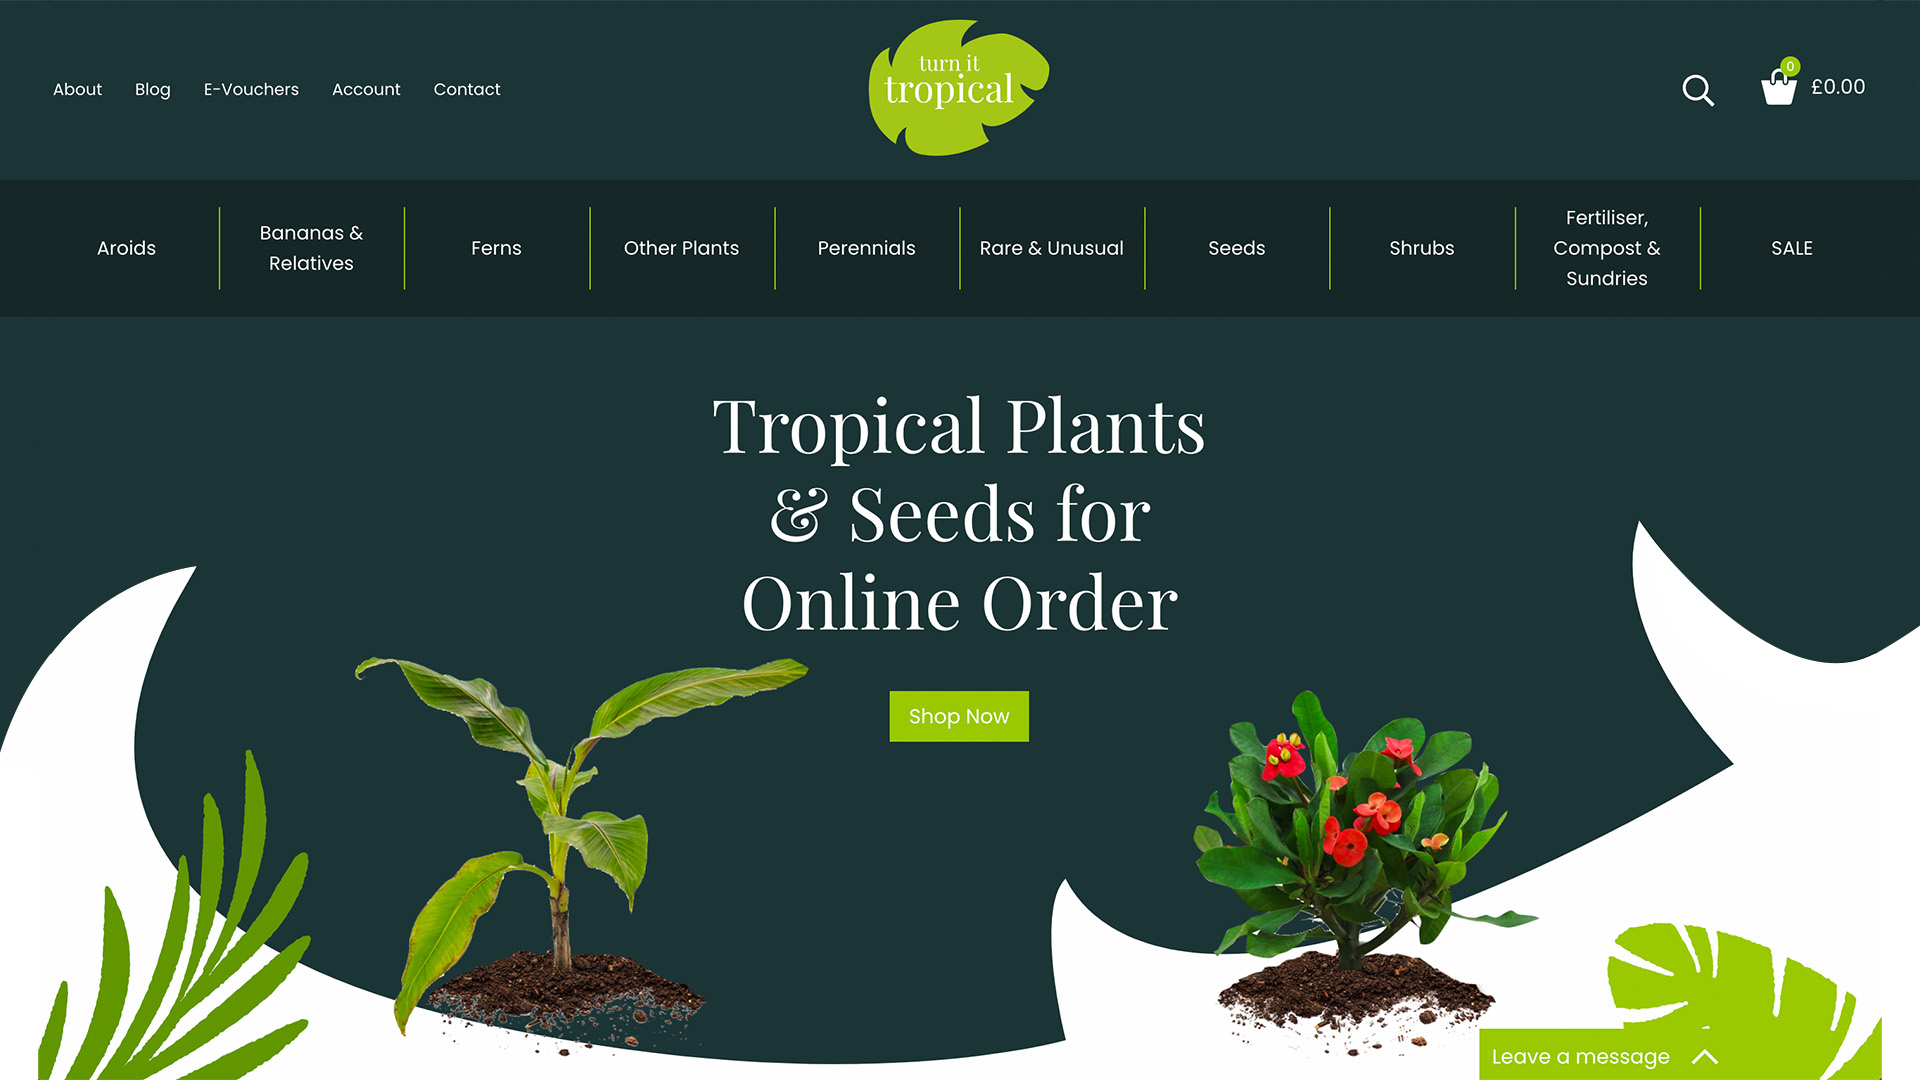 Turn it Tropical homepage